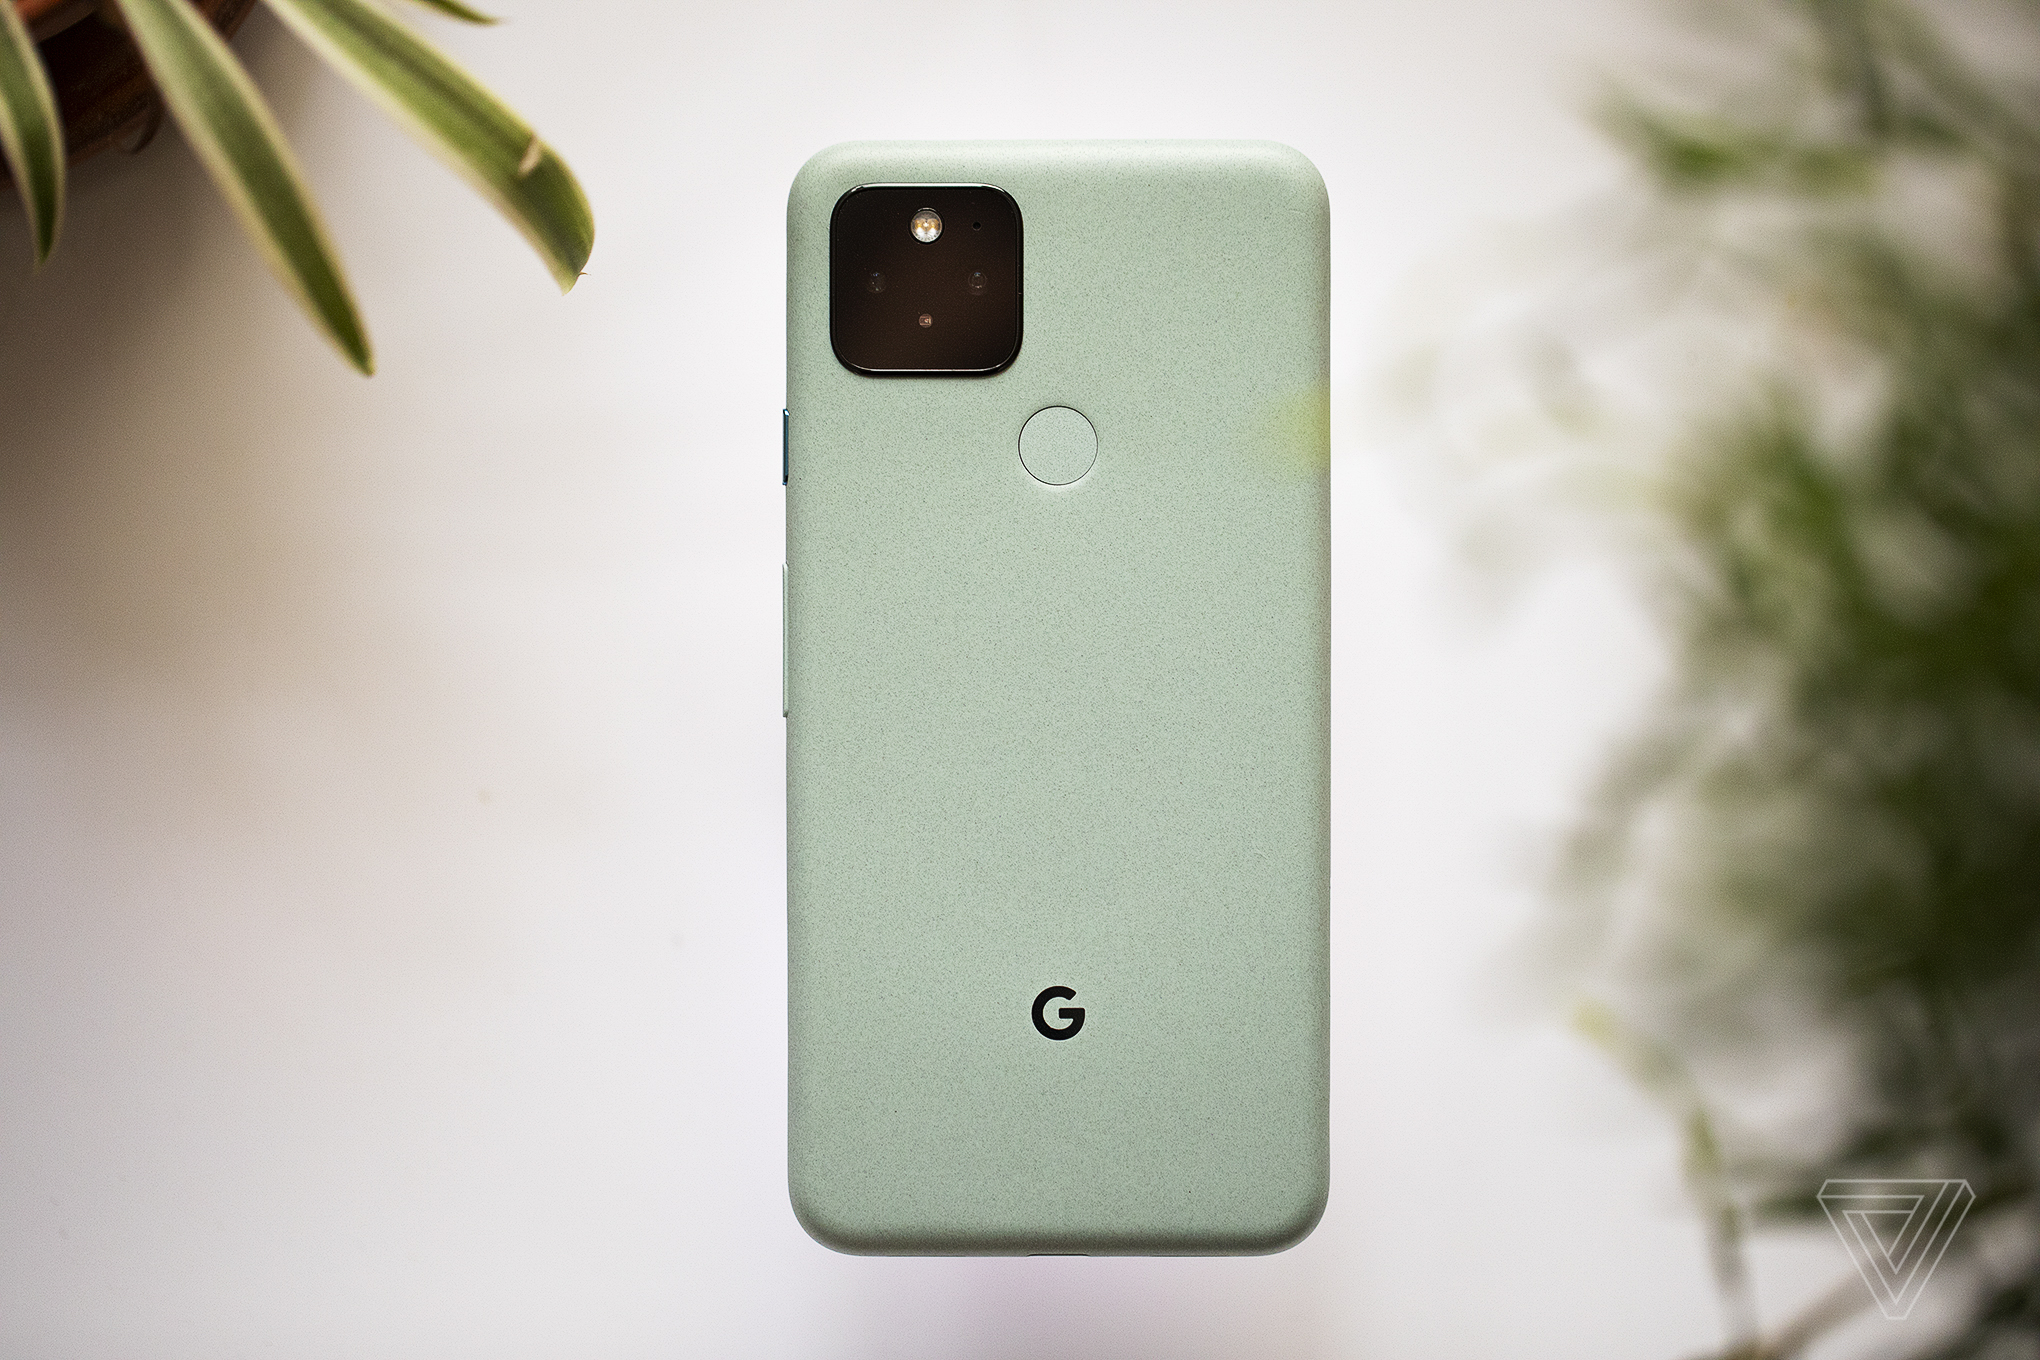 The Google Pixel 5 in “Sorta Sage” green